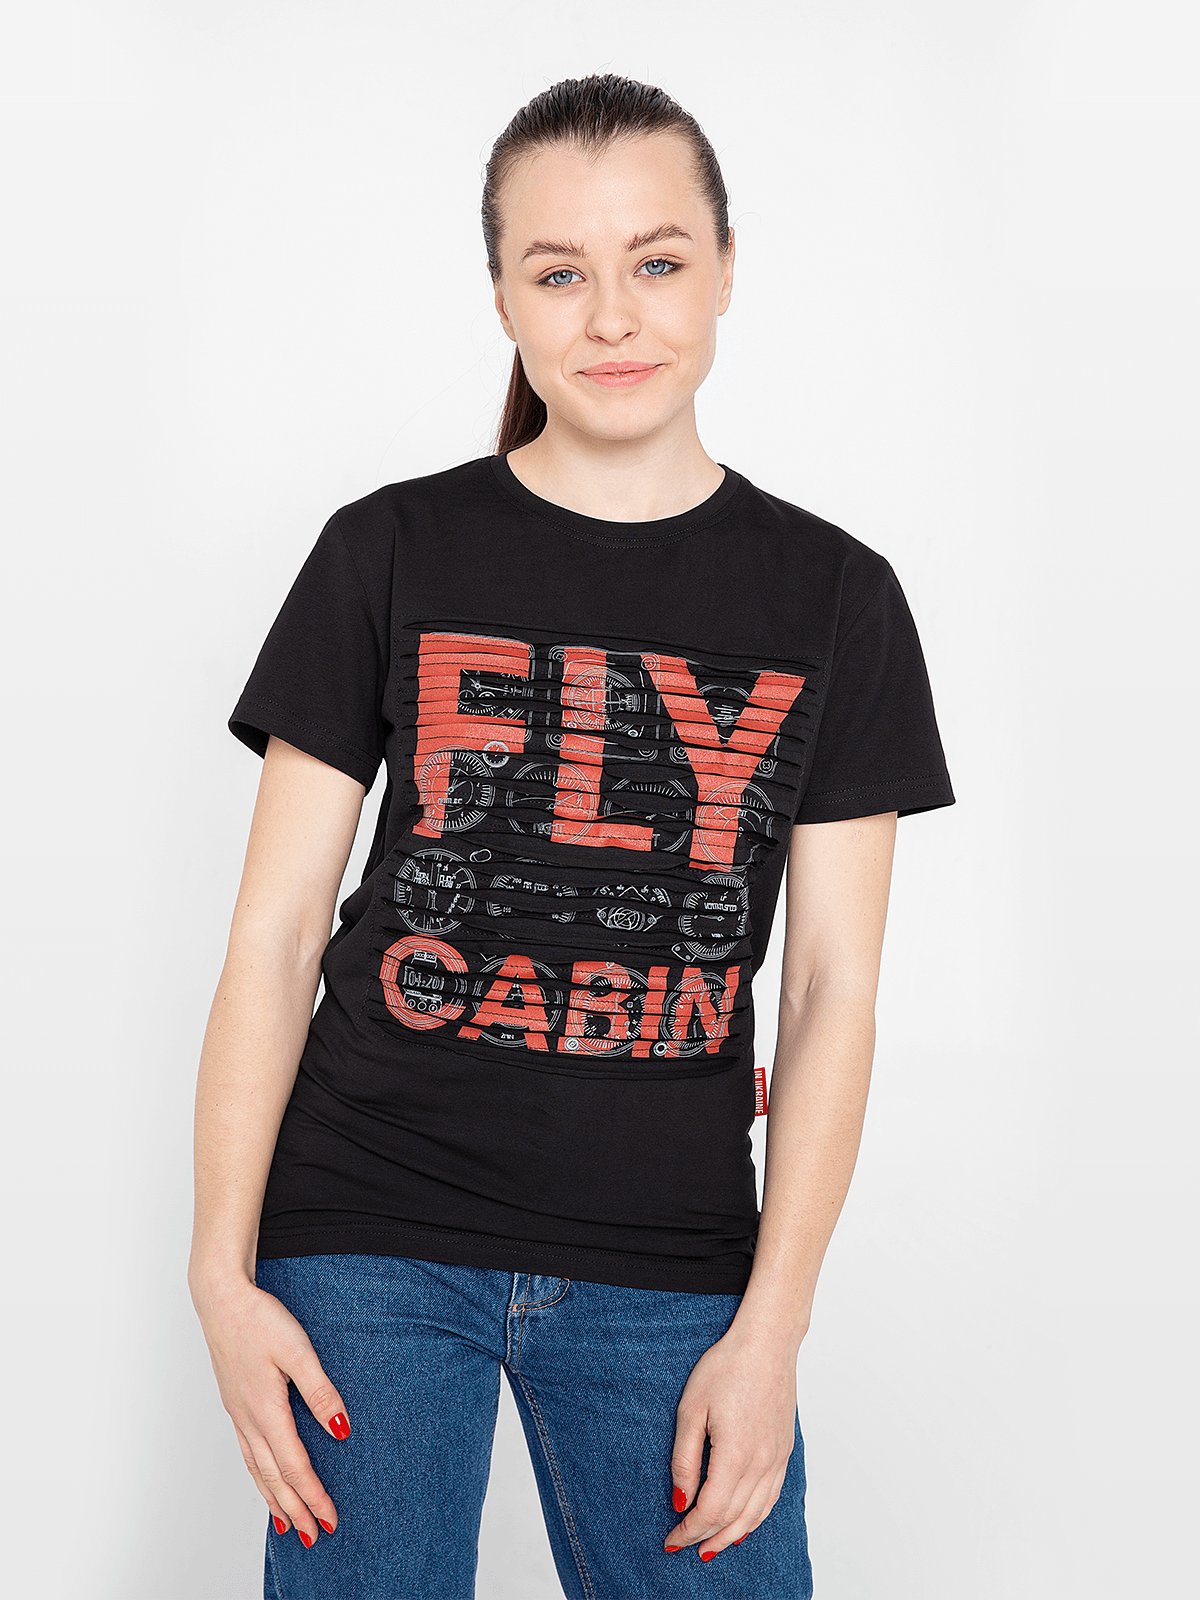 Women's T-Shirt Fly Cabin. Color black. .